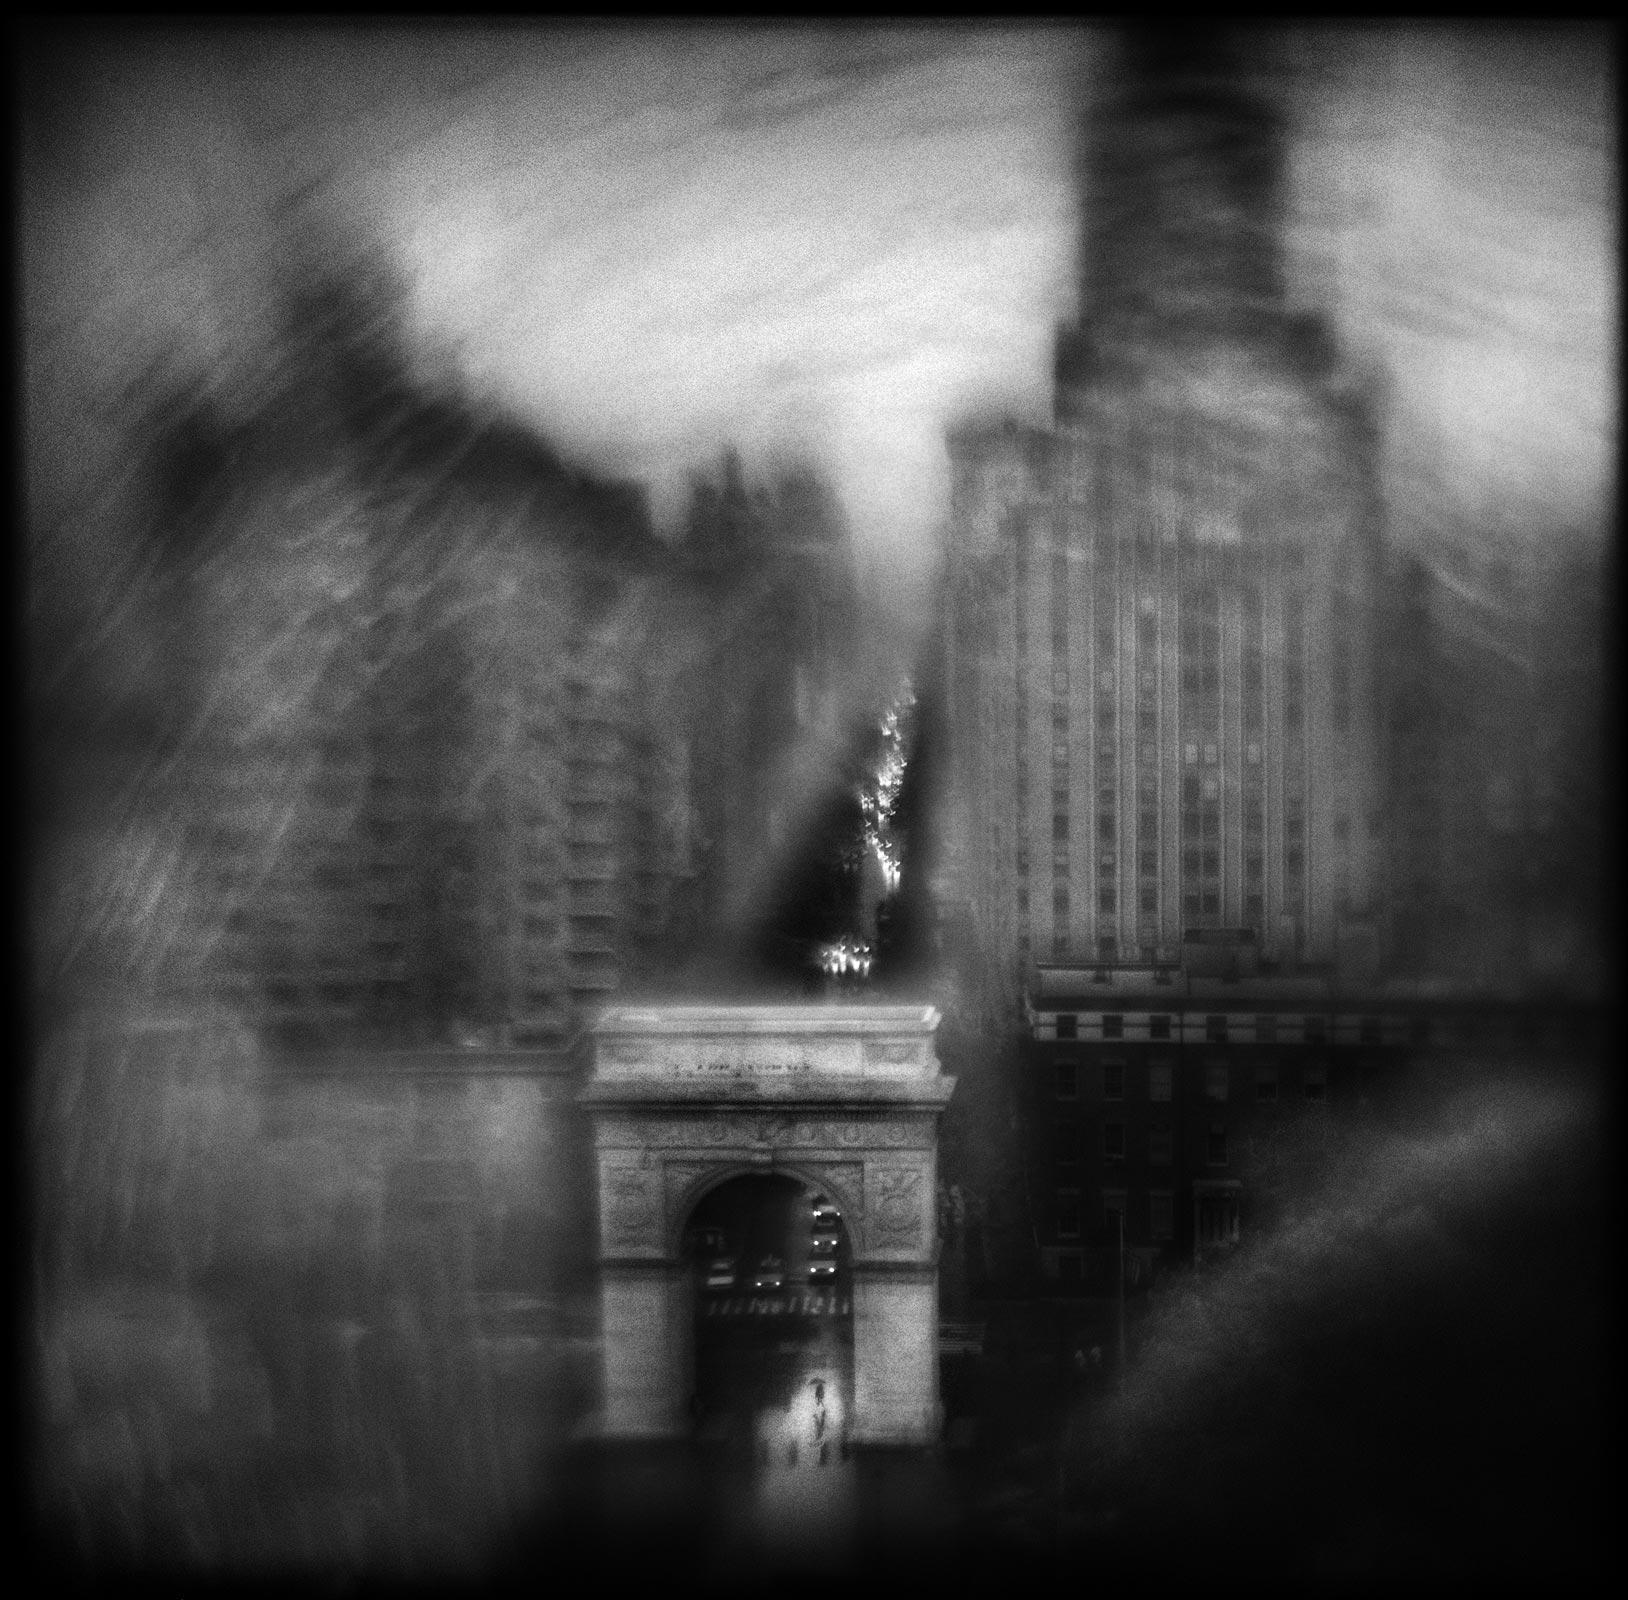 Susan Burnstine Black and White Photograph - The Last Goodbye, 2010